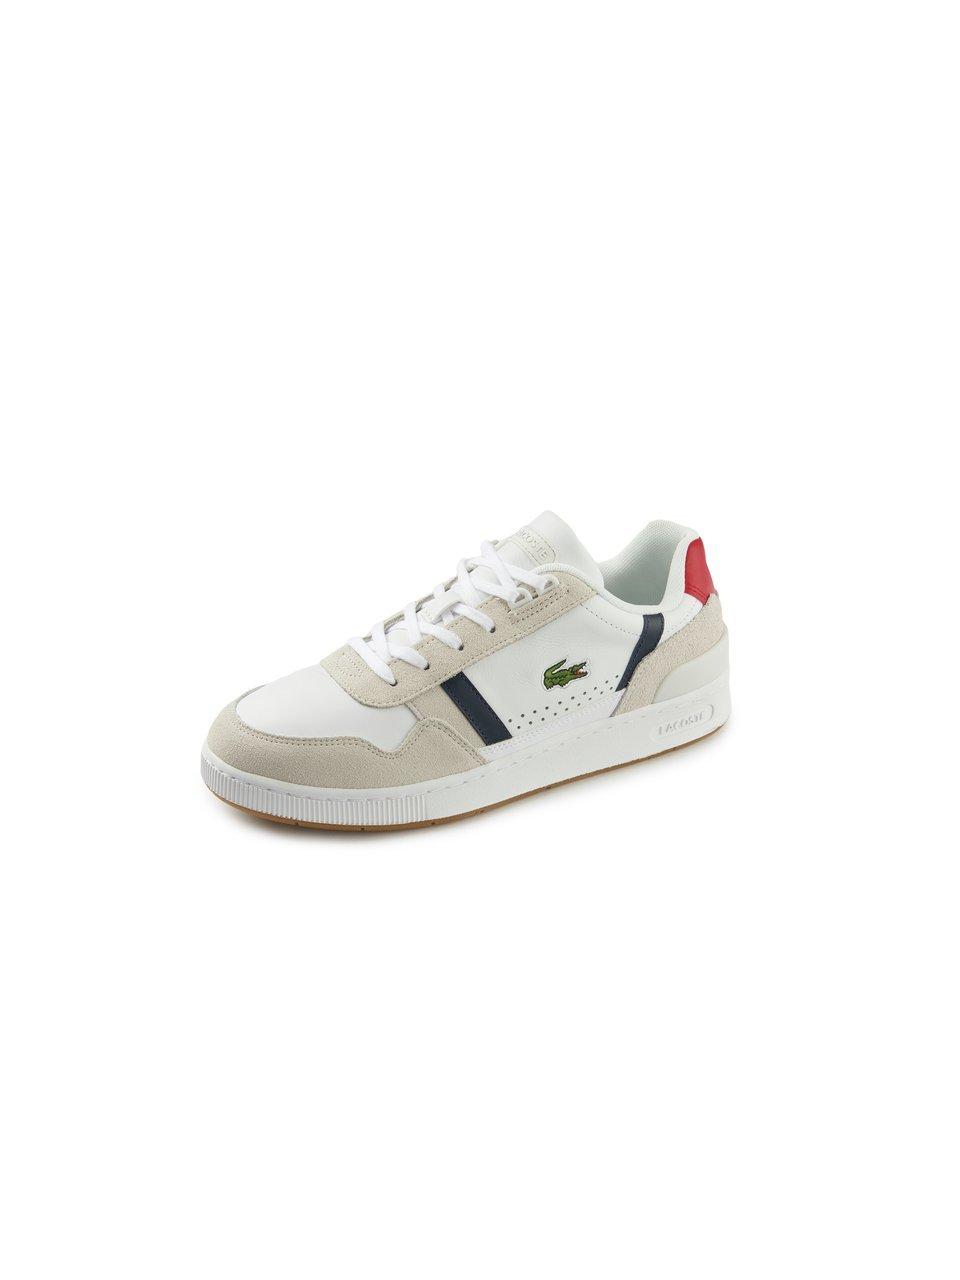 Lacoste - Sneakers - white/multicoloured